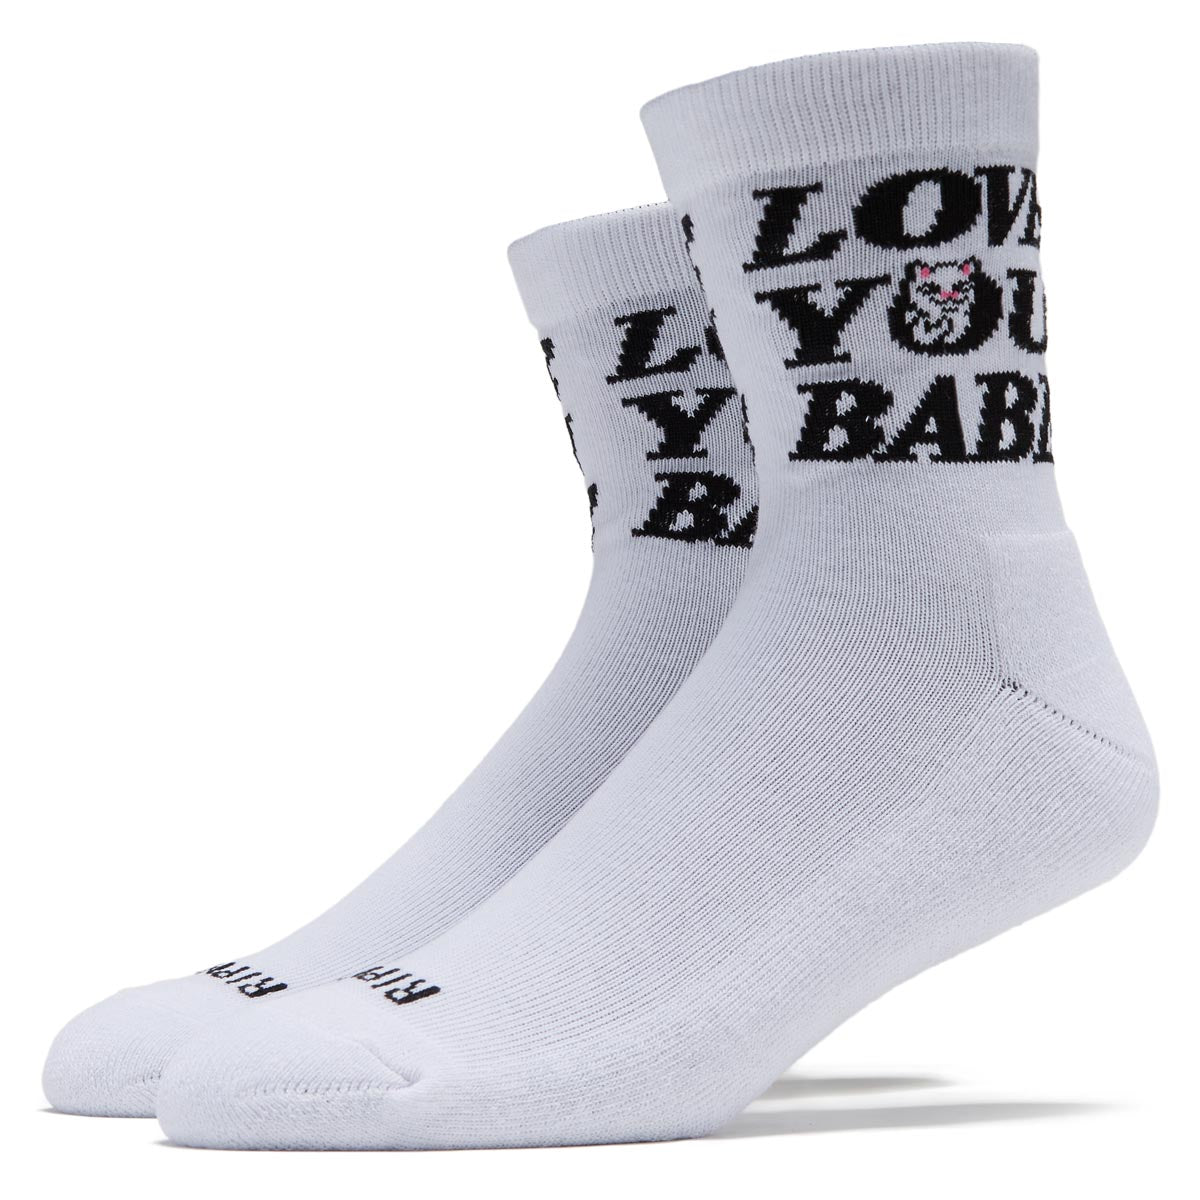 RIPNDIP Love You Mid Socks - White image 1